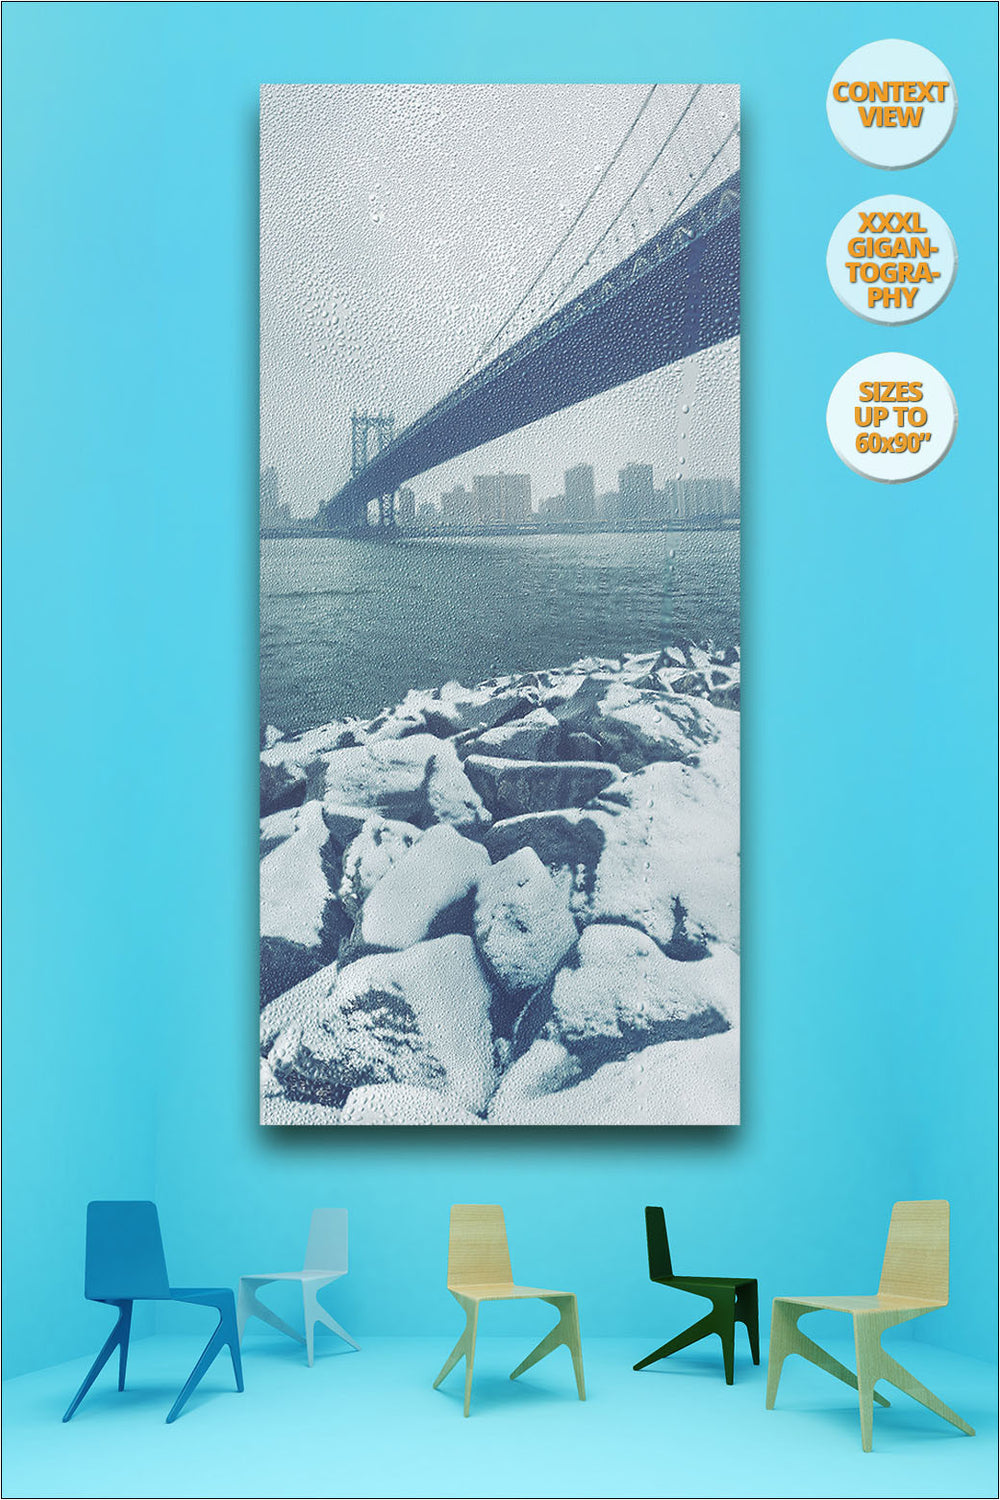 Manhattan Bridge in Blizzard, Winter, New York. | View of Giant Print hanged in office.